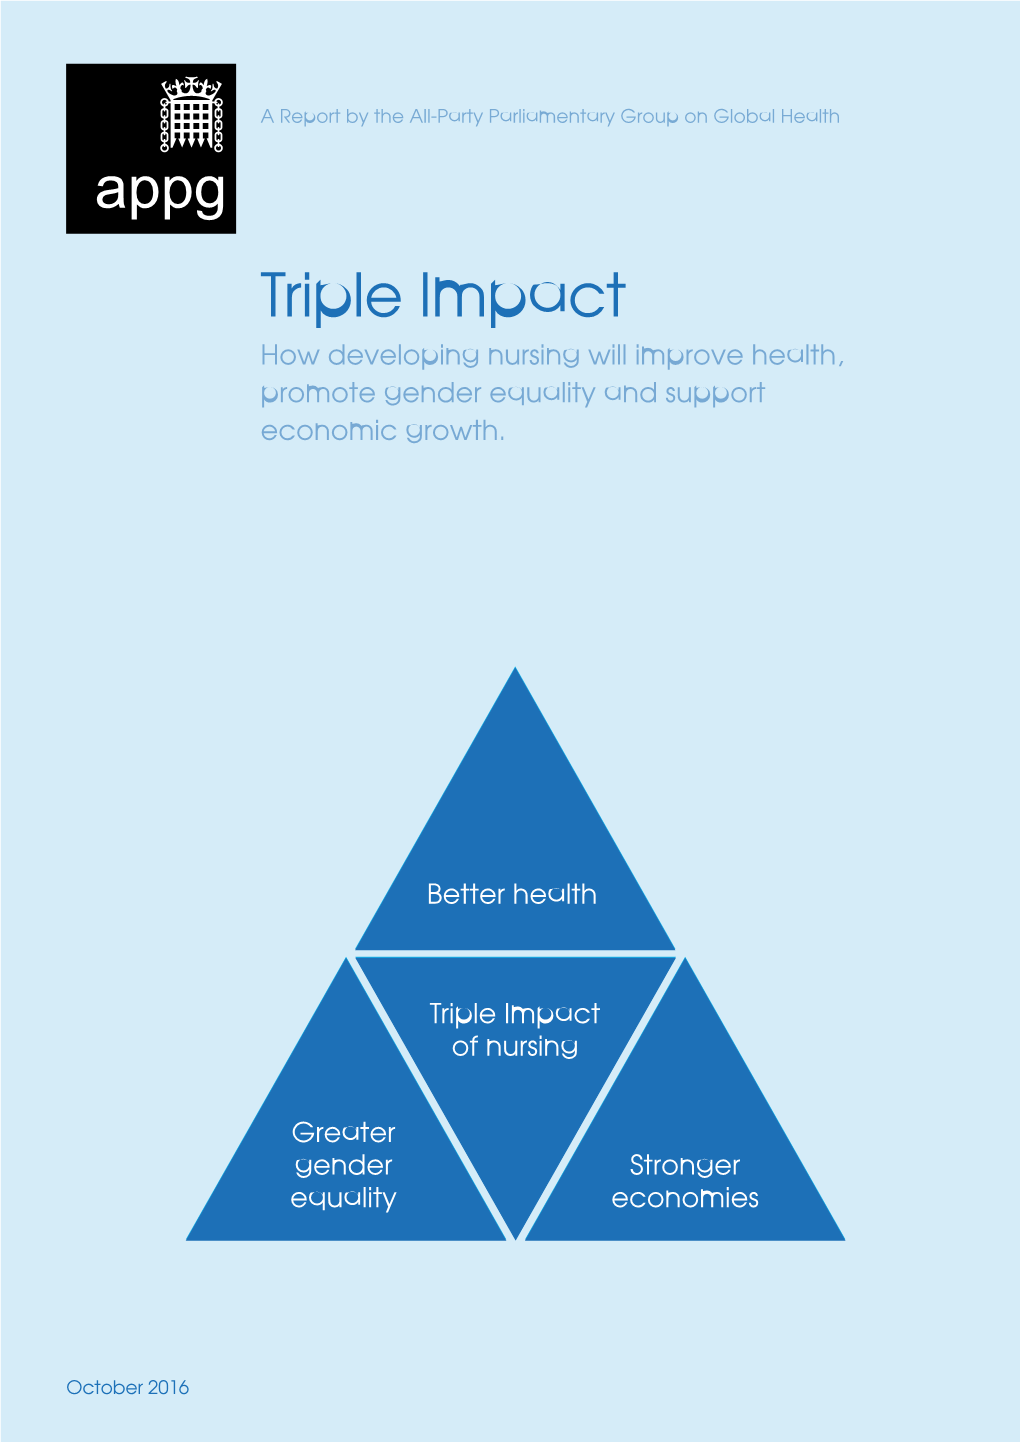 Triple Impact of Nursing